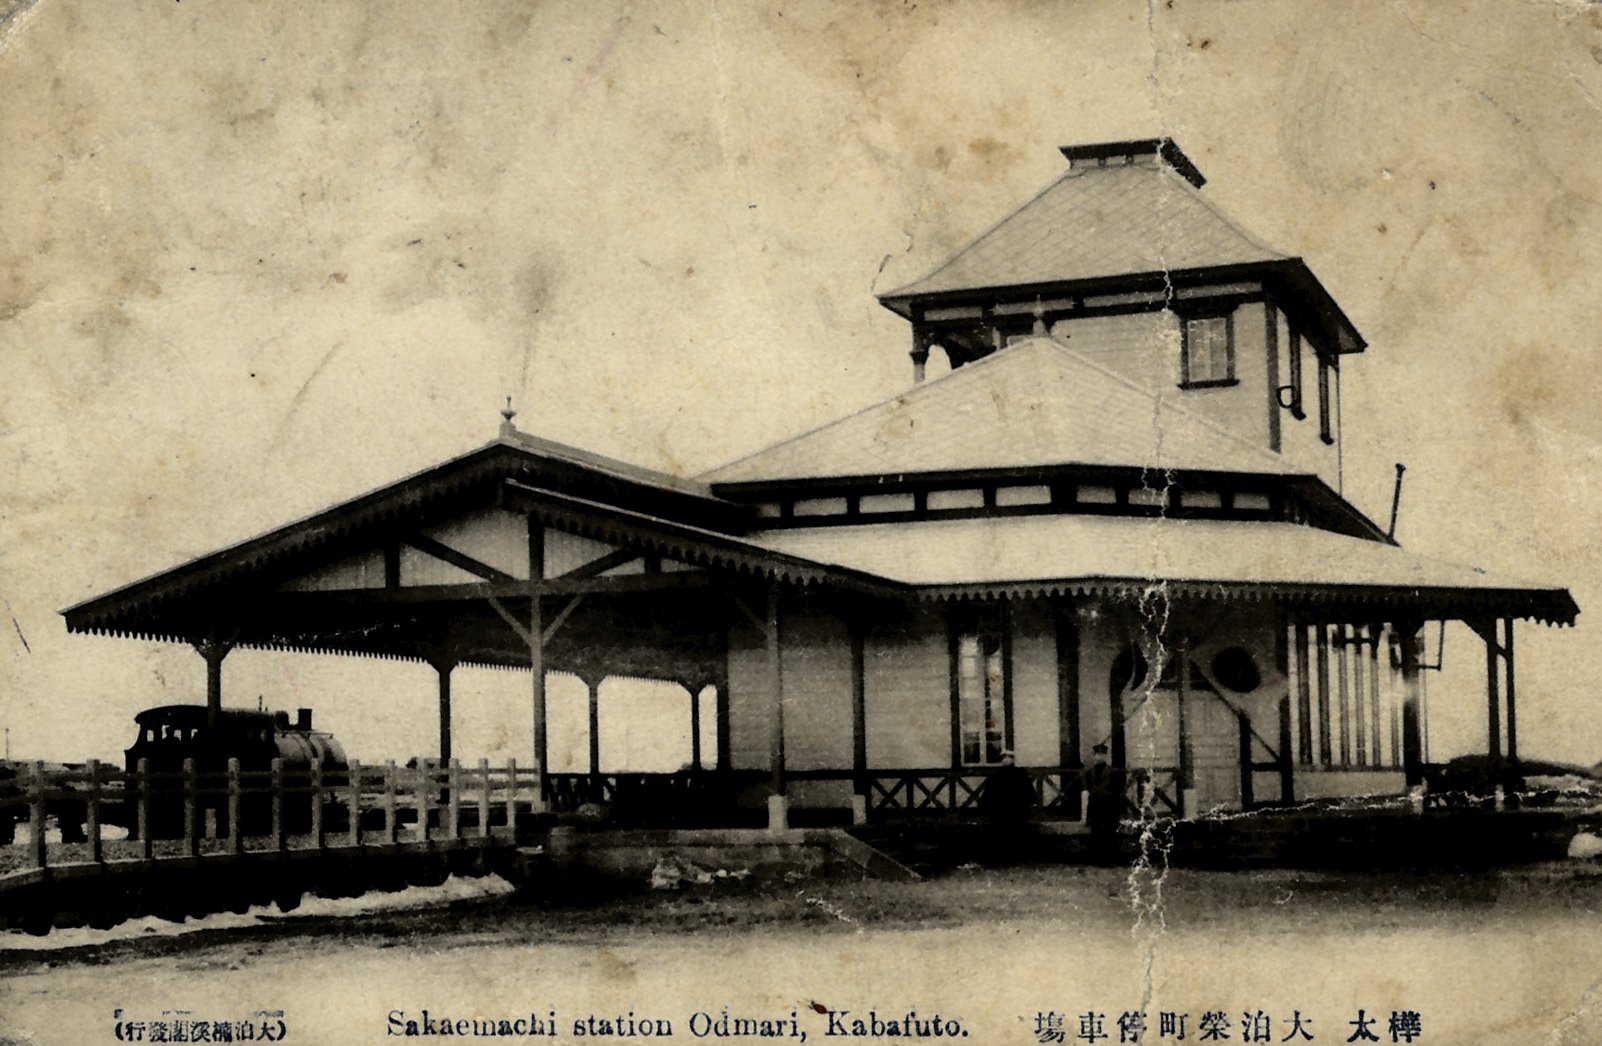 Отомари. Железнодорожная станция Сакаэмачи в Отомари (1920-1925 гг.)